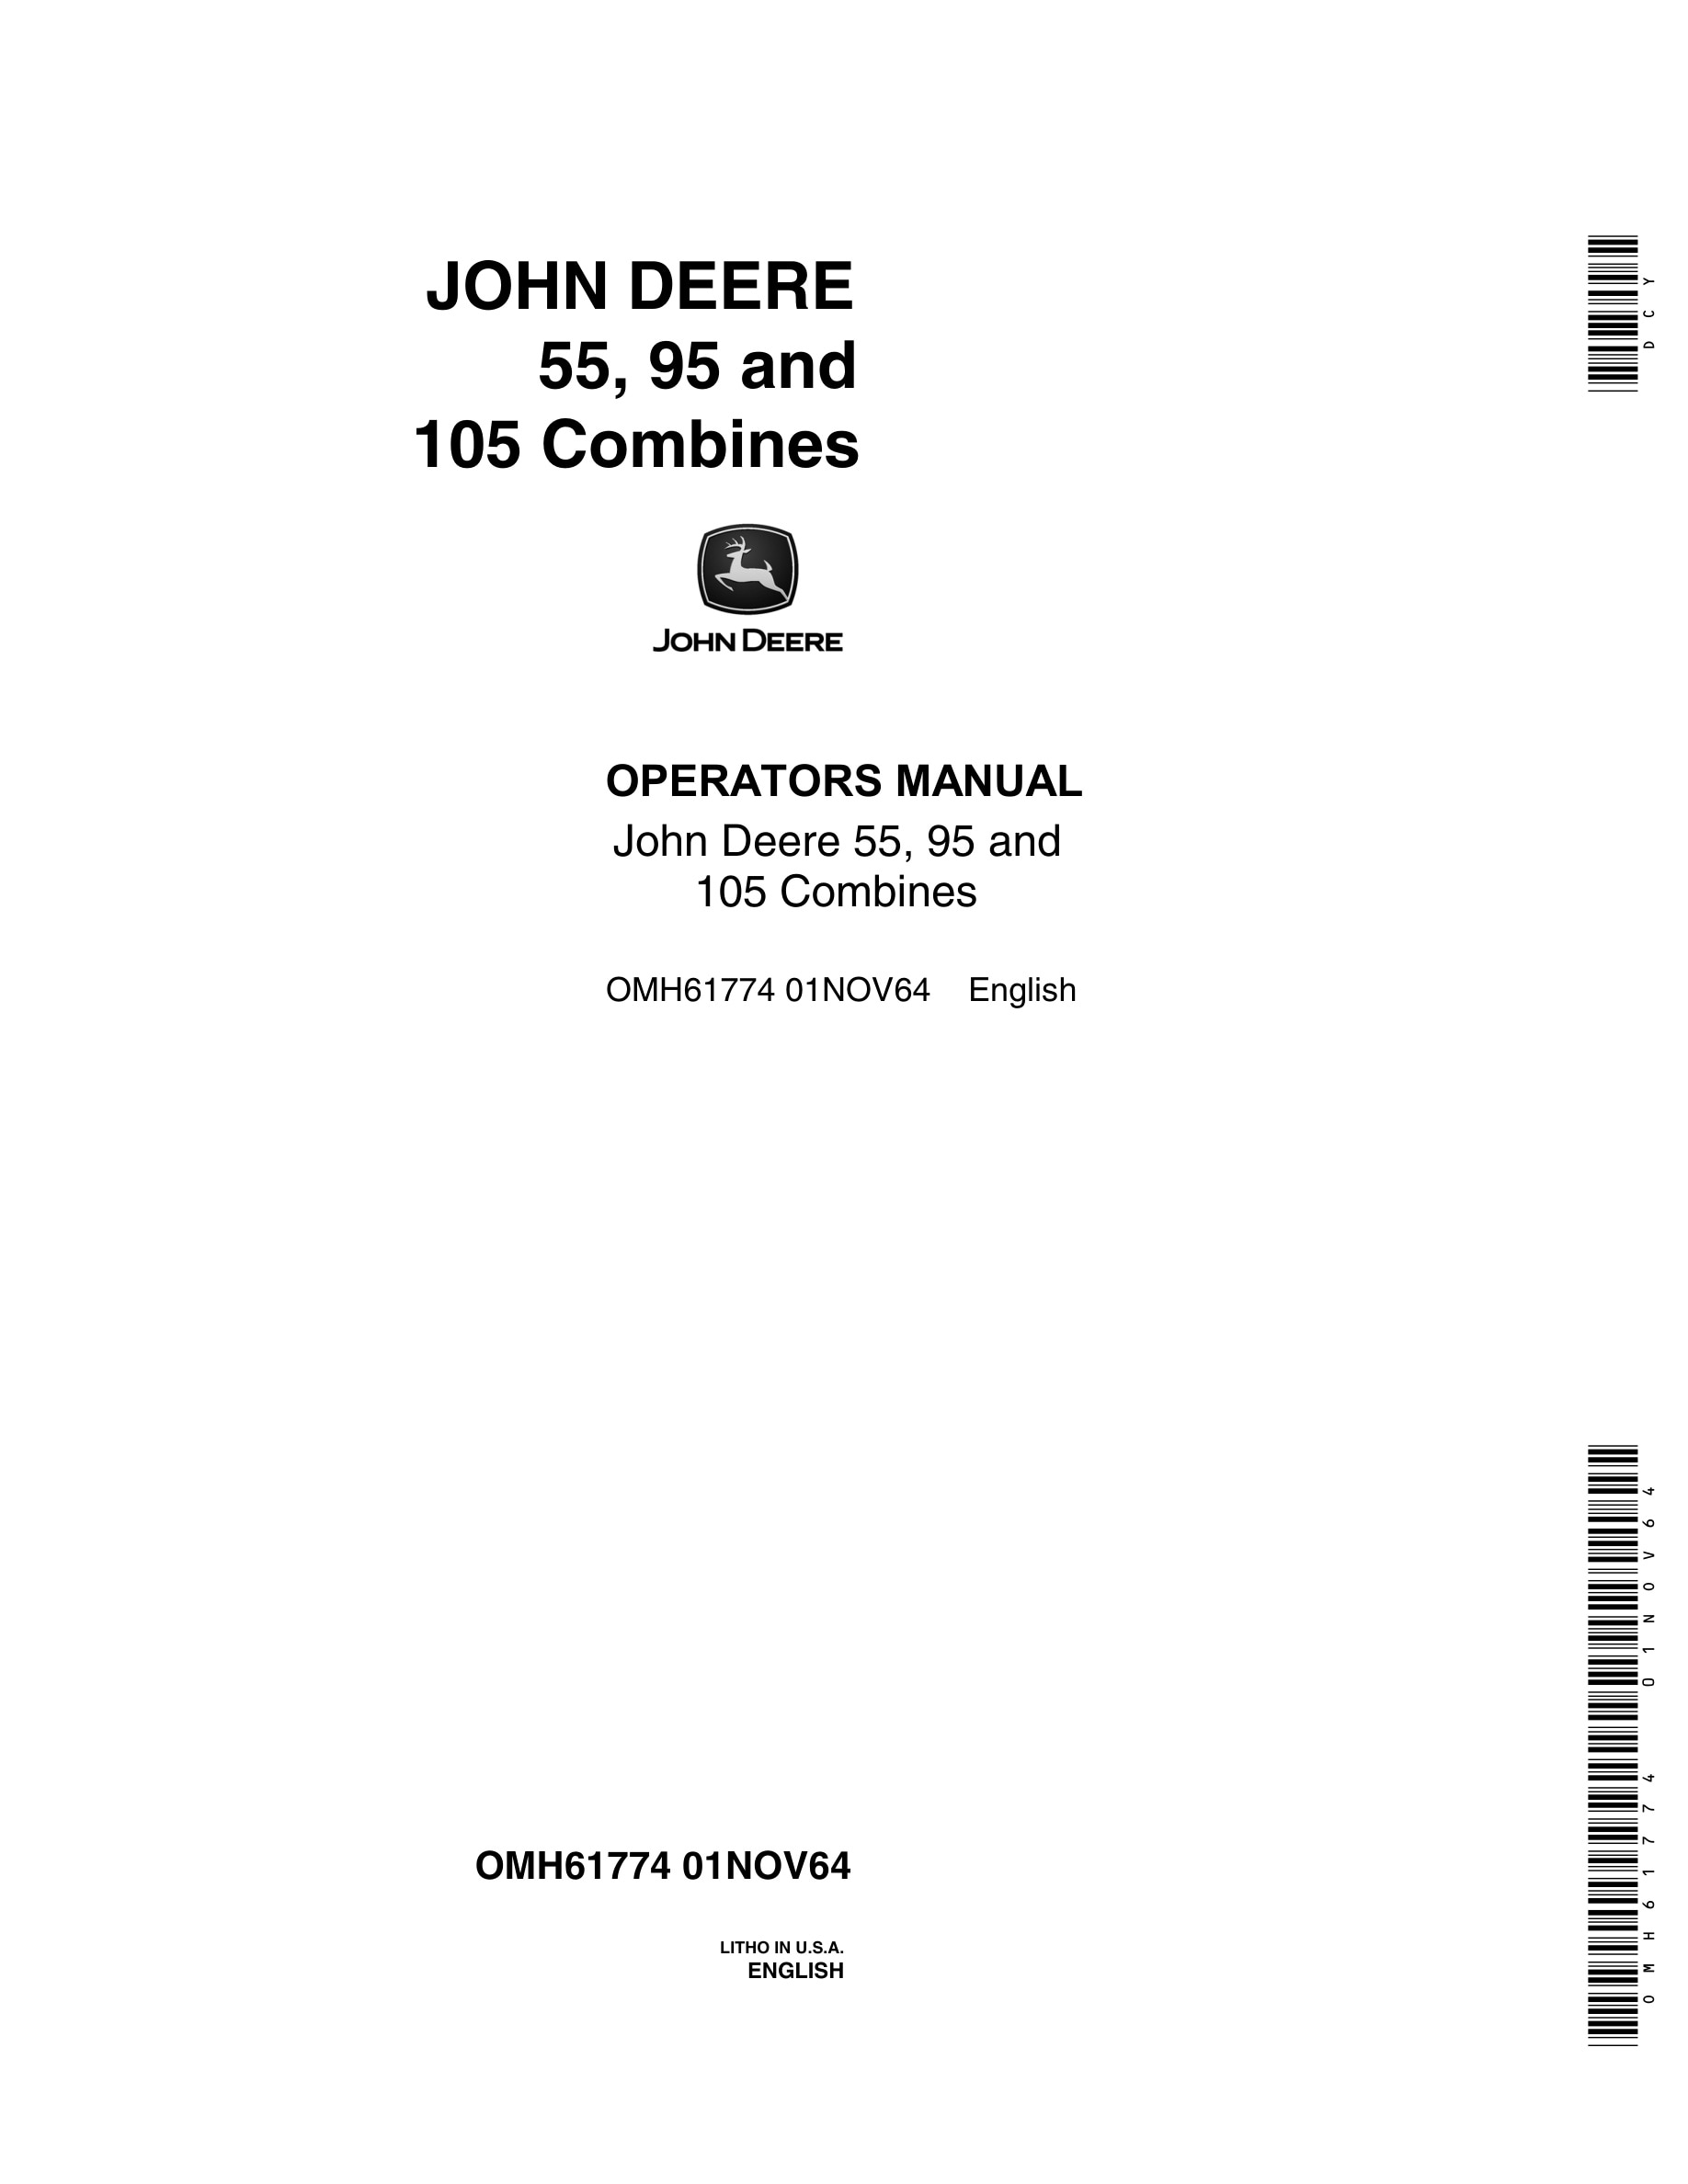 John Deere 55, 95 and 105 Combine Operator Manual OMH61774-1